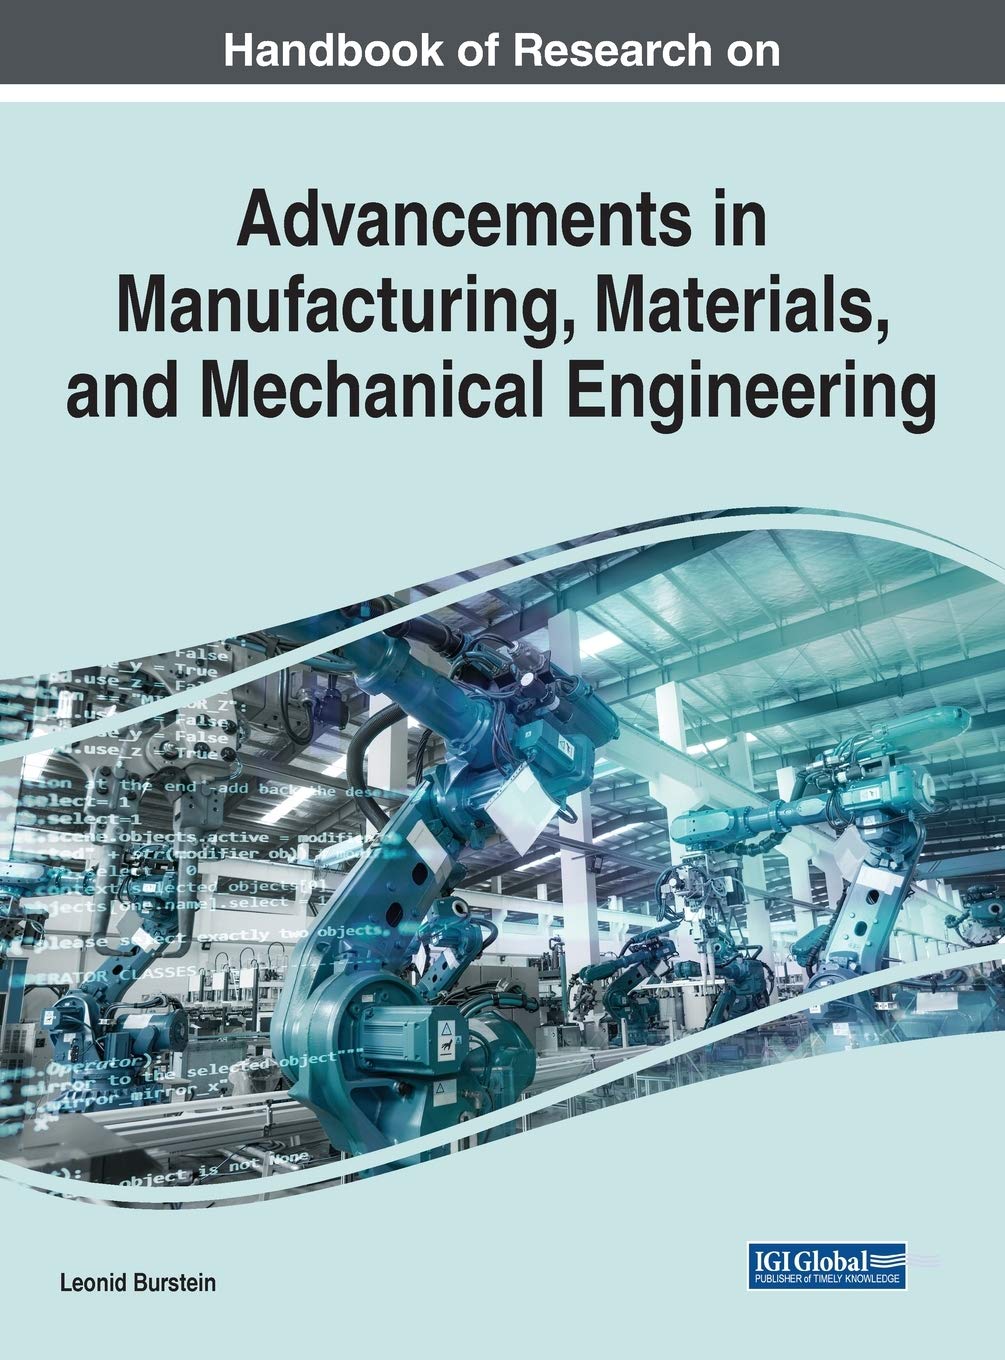 Proceeding engineering. New materials Development. Advancements.